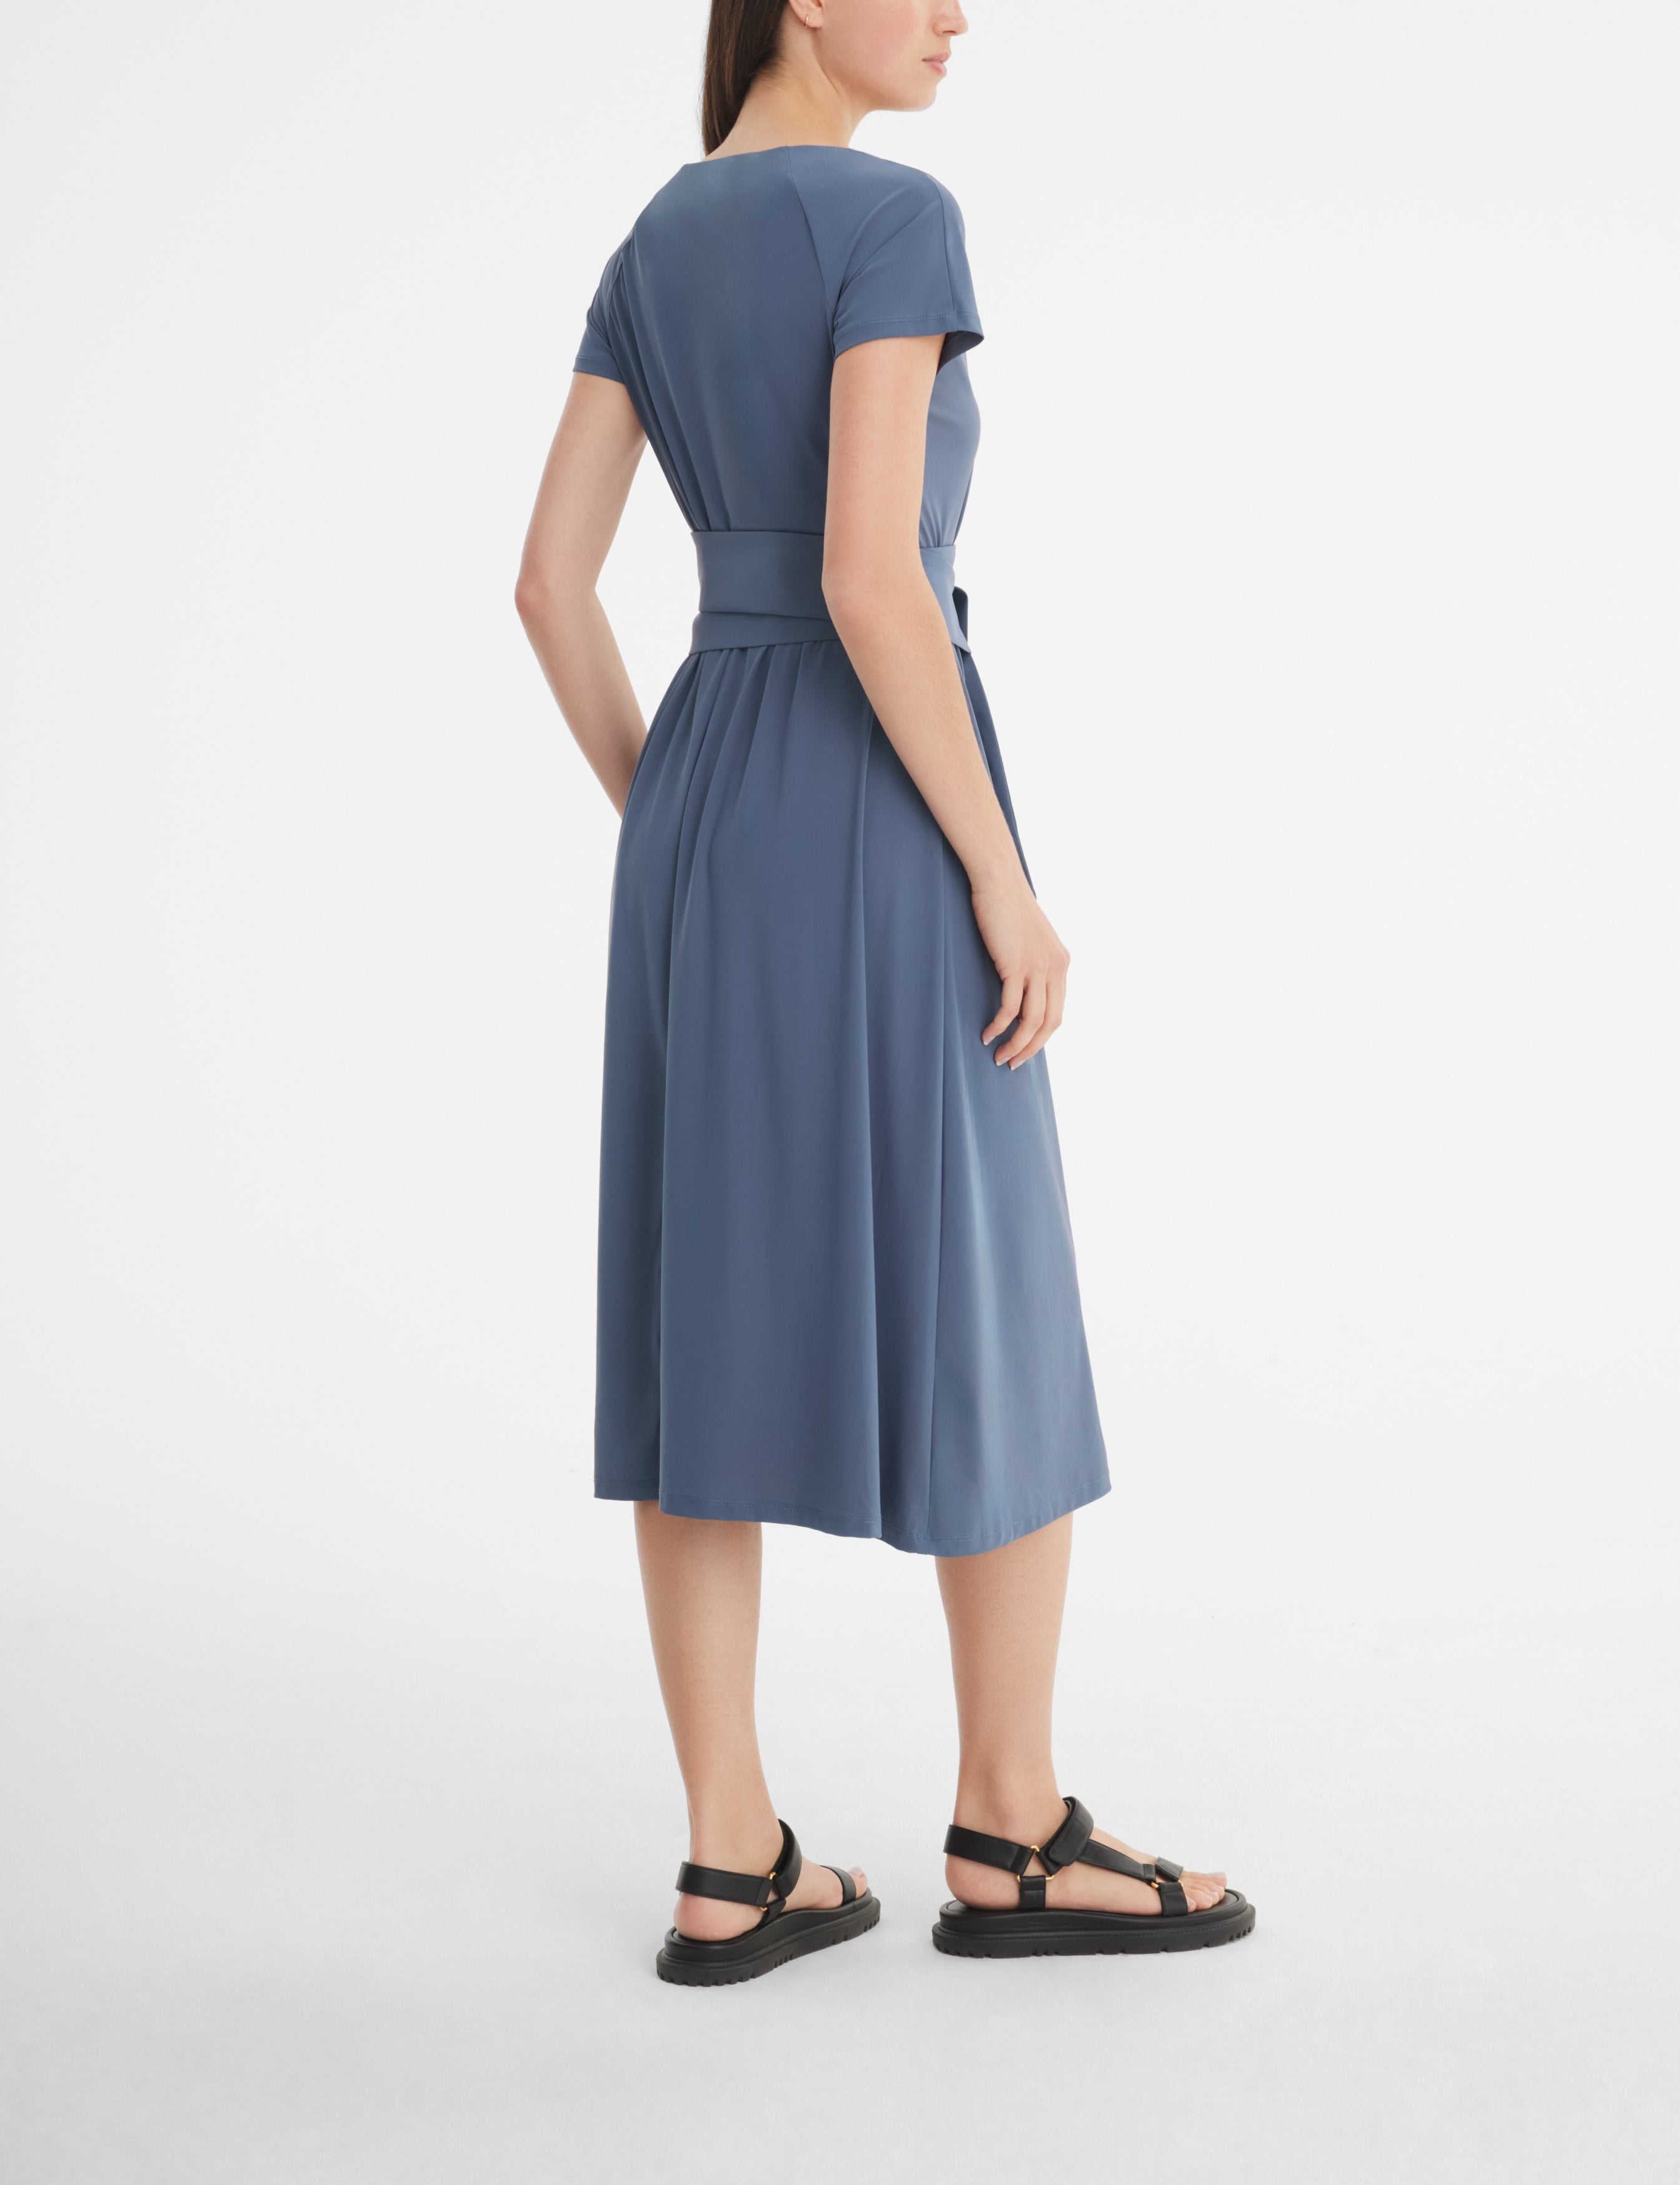 Sarah Pacini Dress Midnight Blue 241.13.045